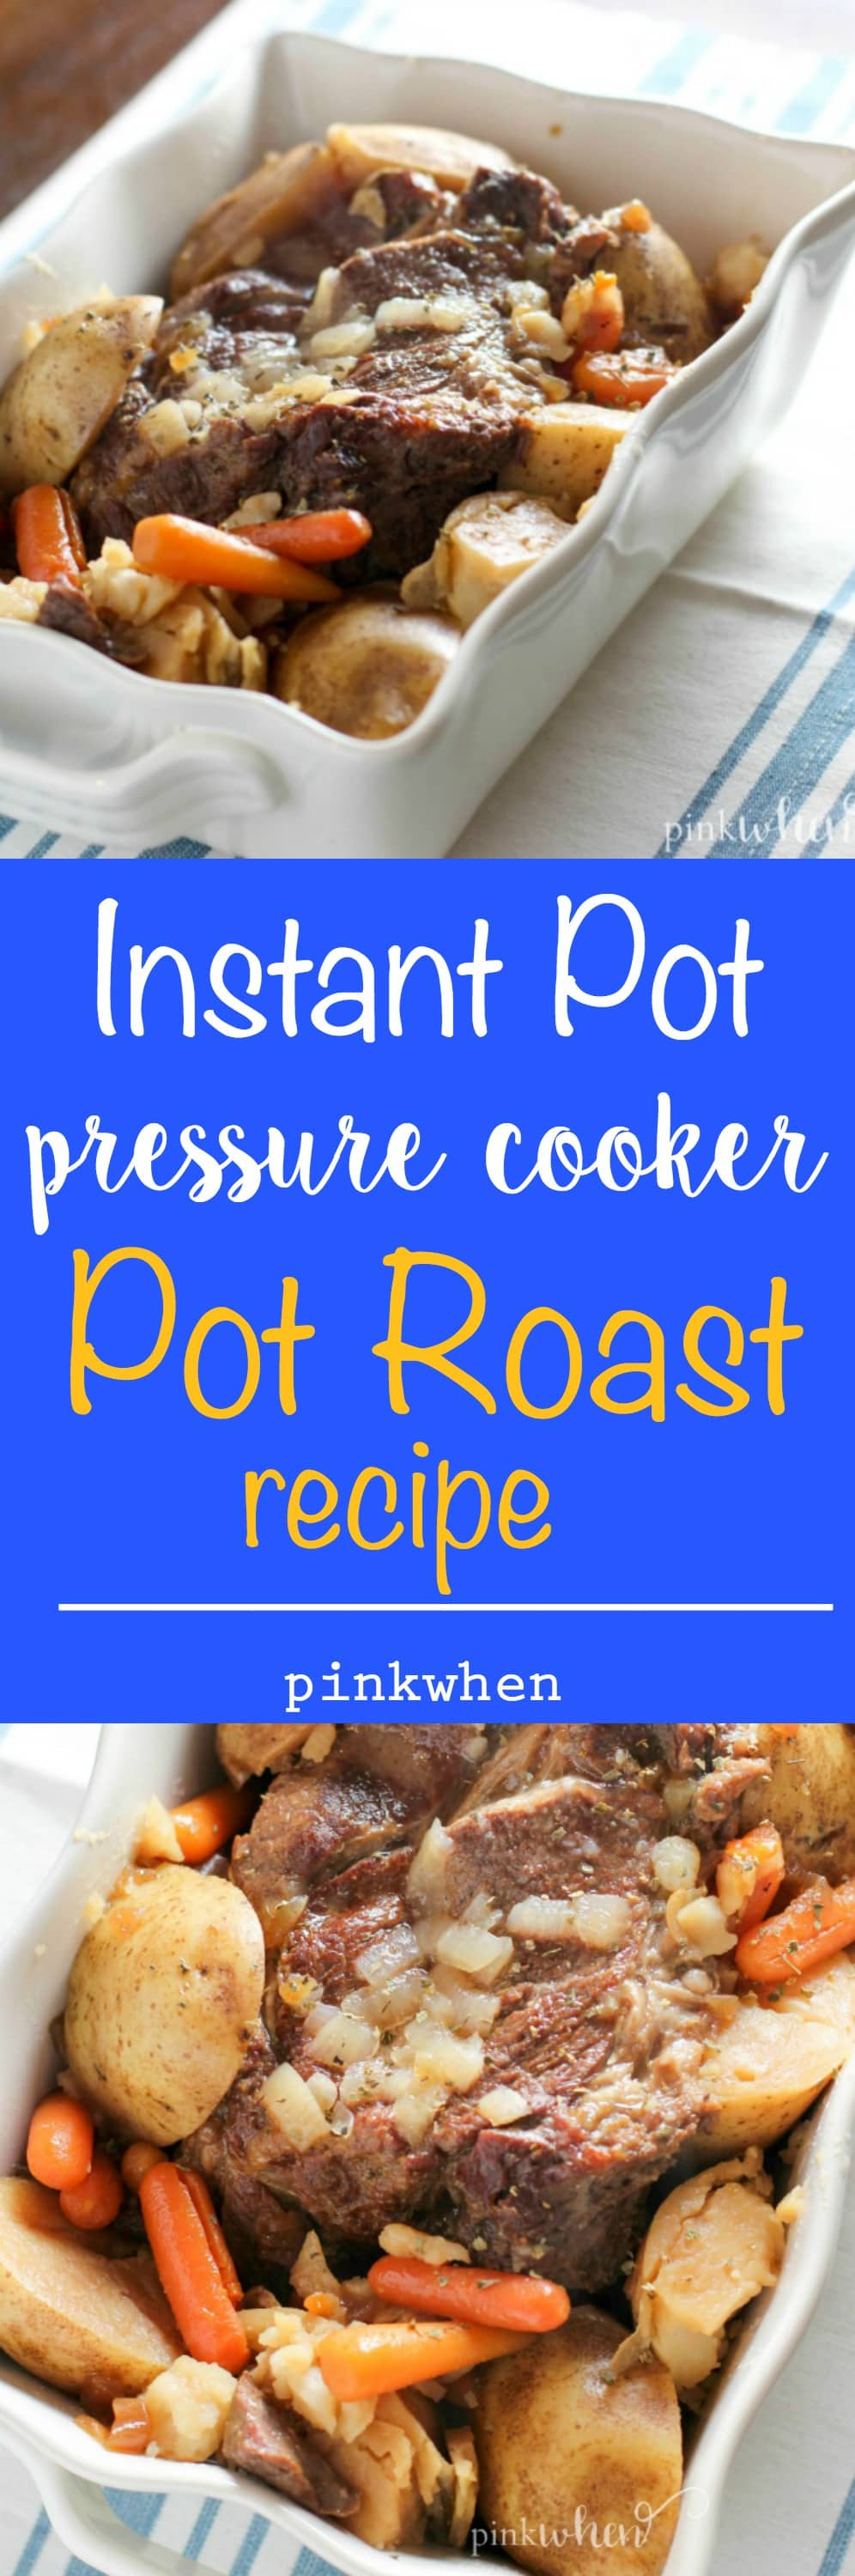 Instant Pot Roast Beef Recipes
 Instant Pot Pressure Cooker Pot Roast Recipe PinkWhen